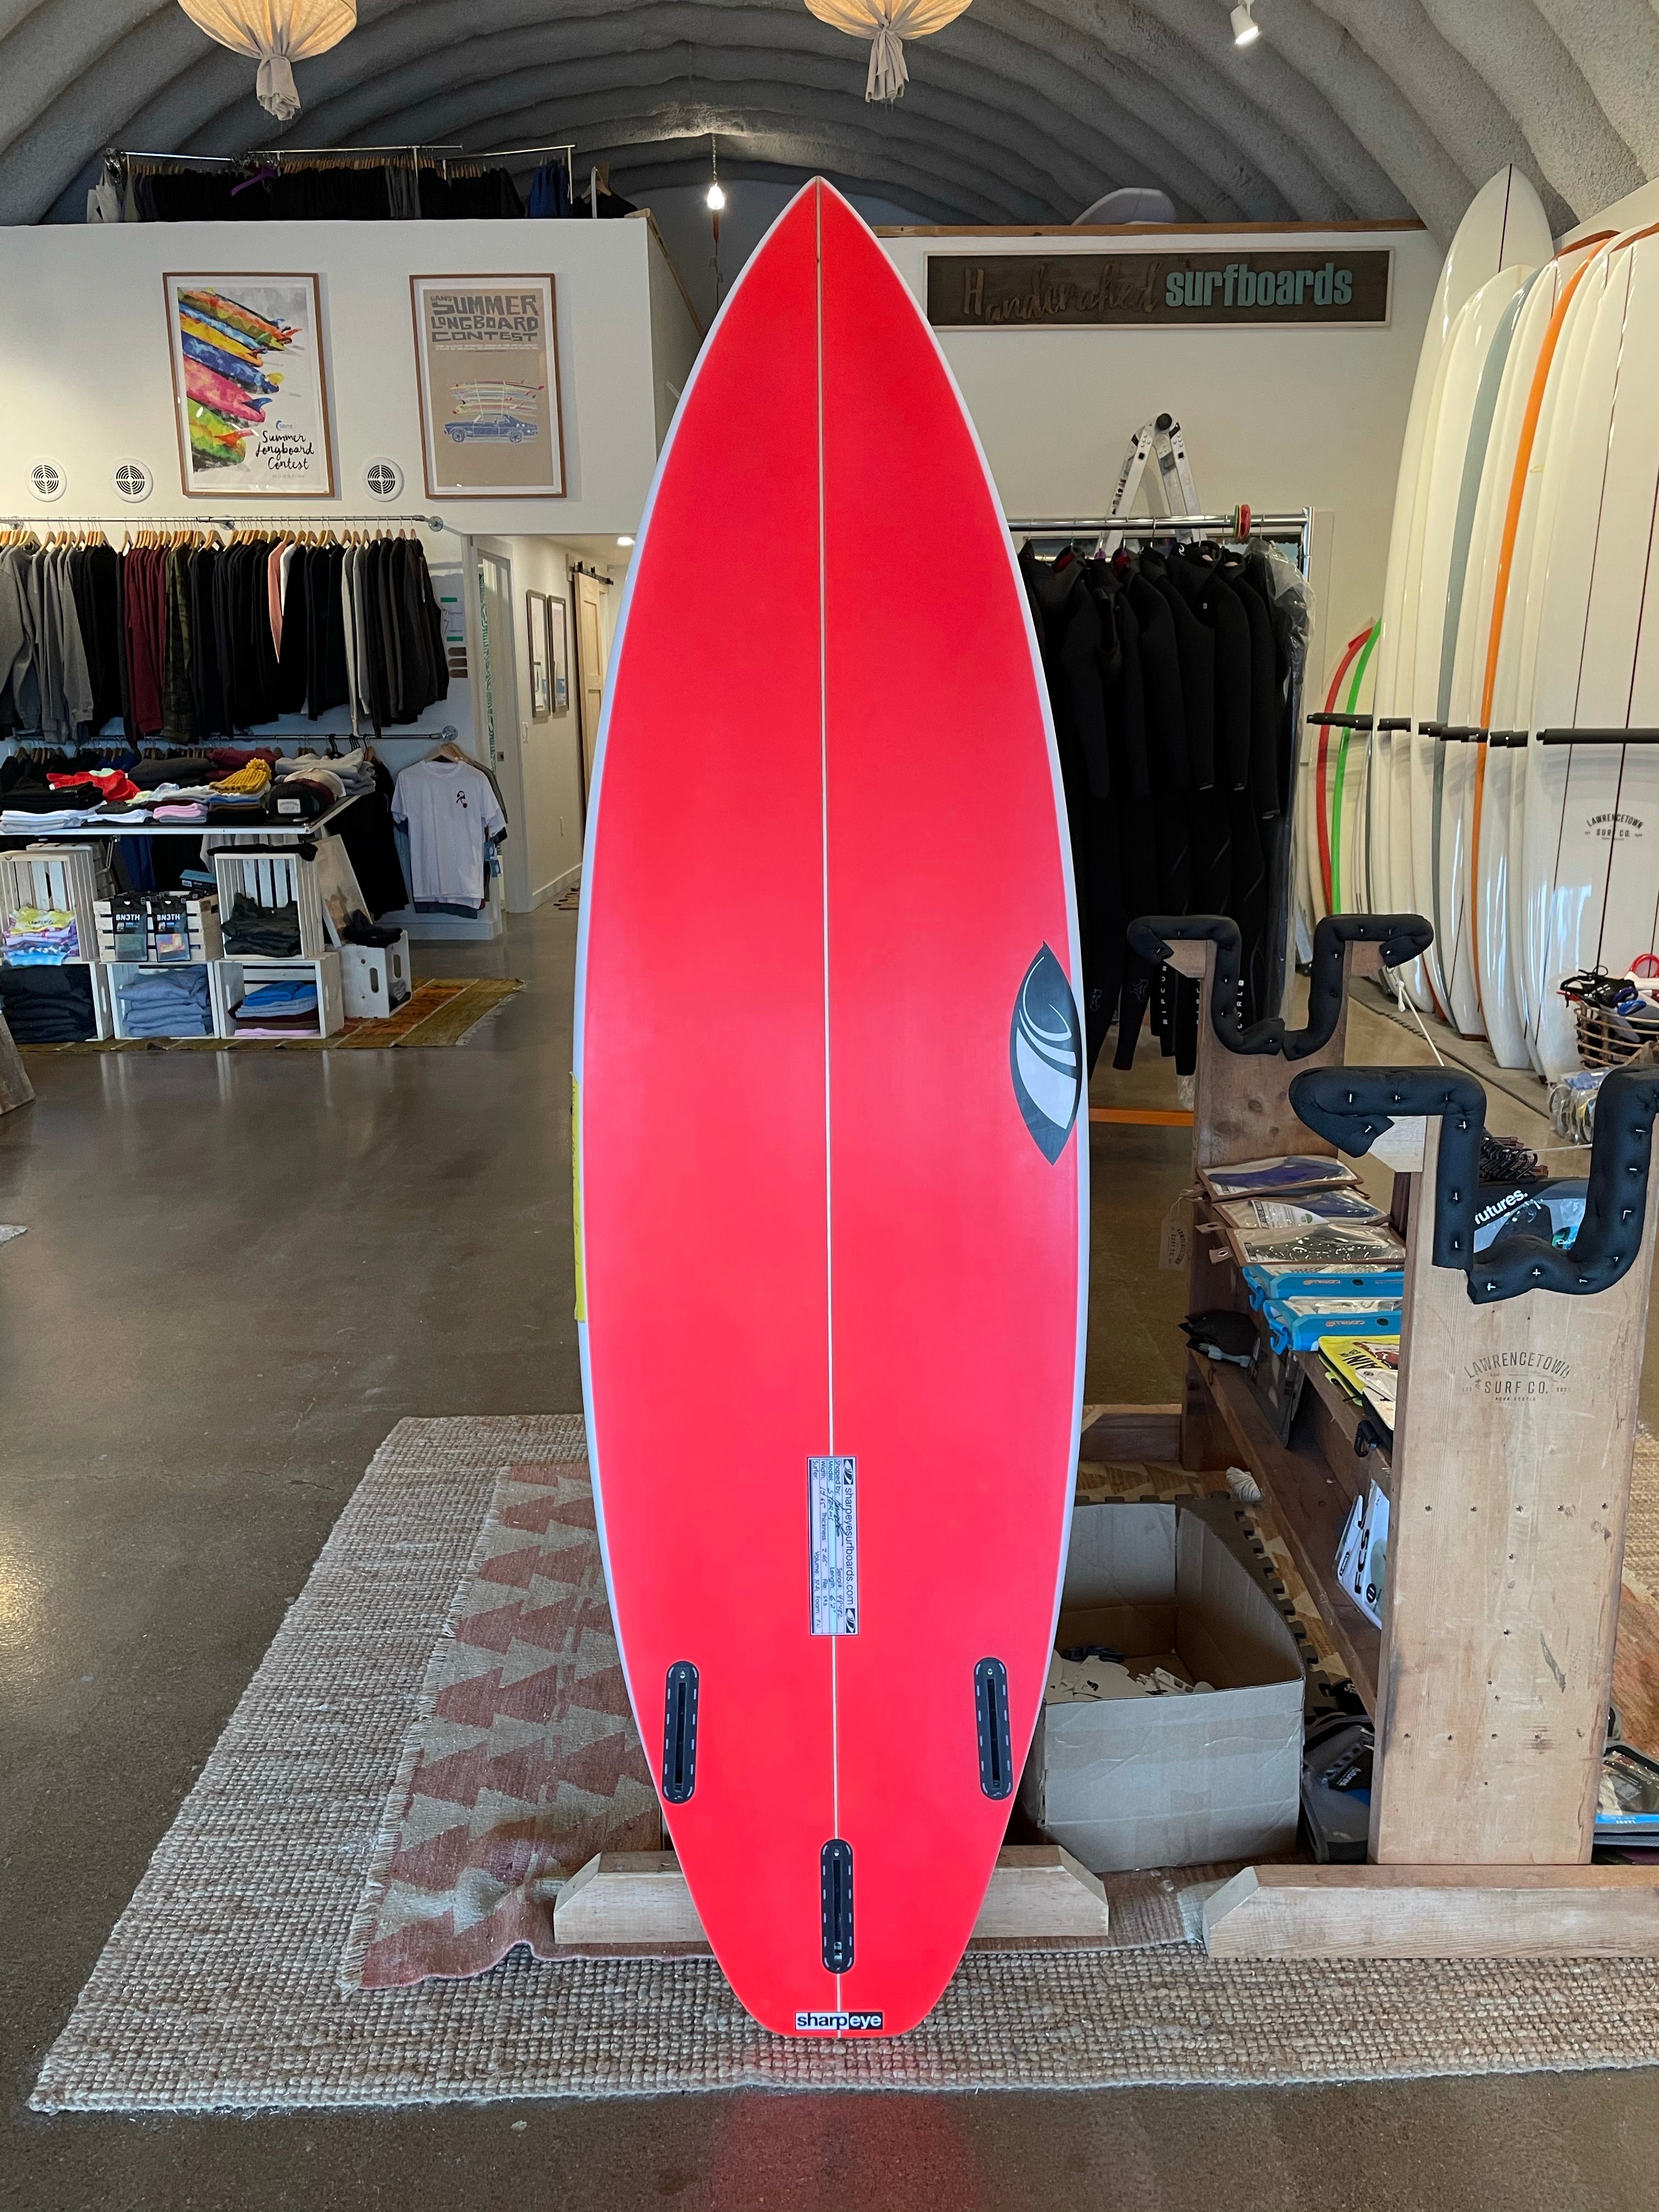 Sharp Eye Surfboards - Storms 6'3” x 19.88